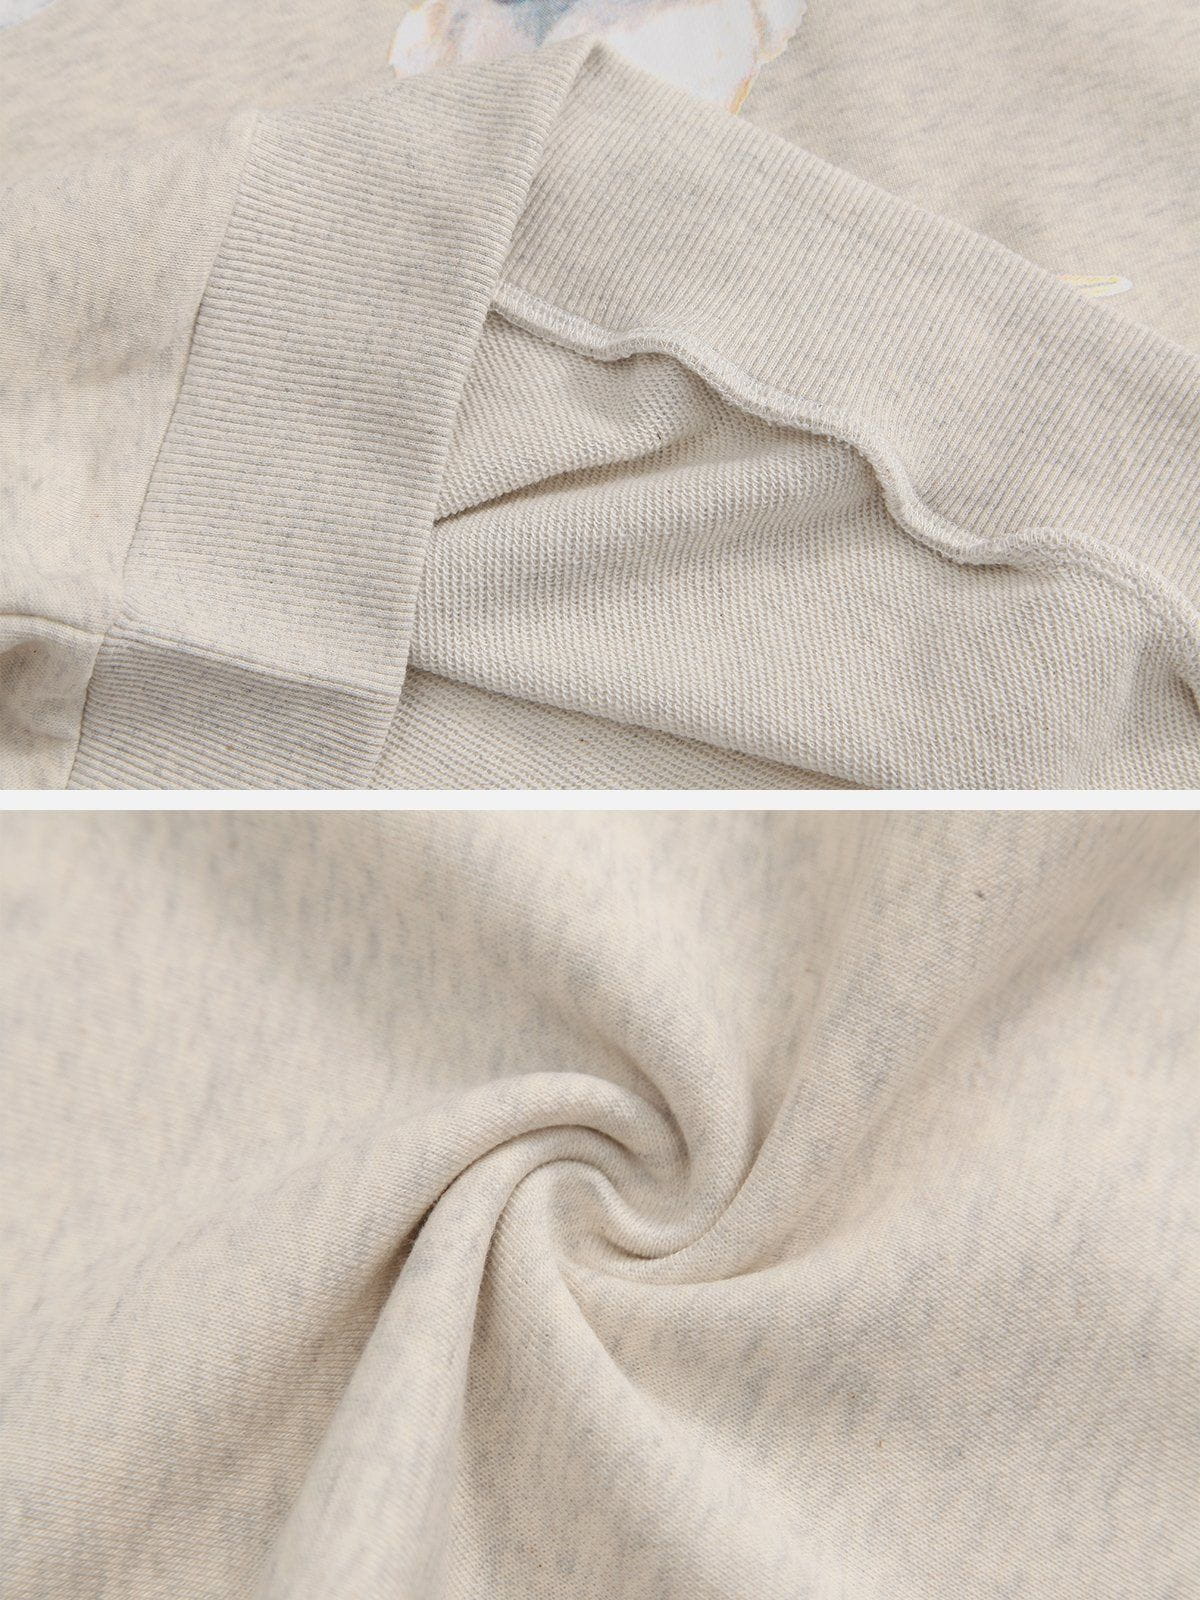 LUXENFY™ - Bunny Dove Print Sweatshirt luxenfy.com